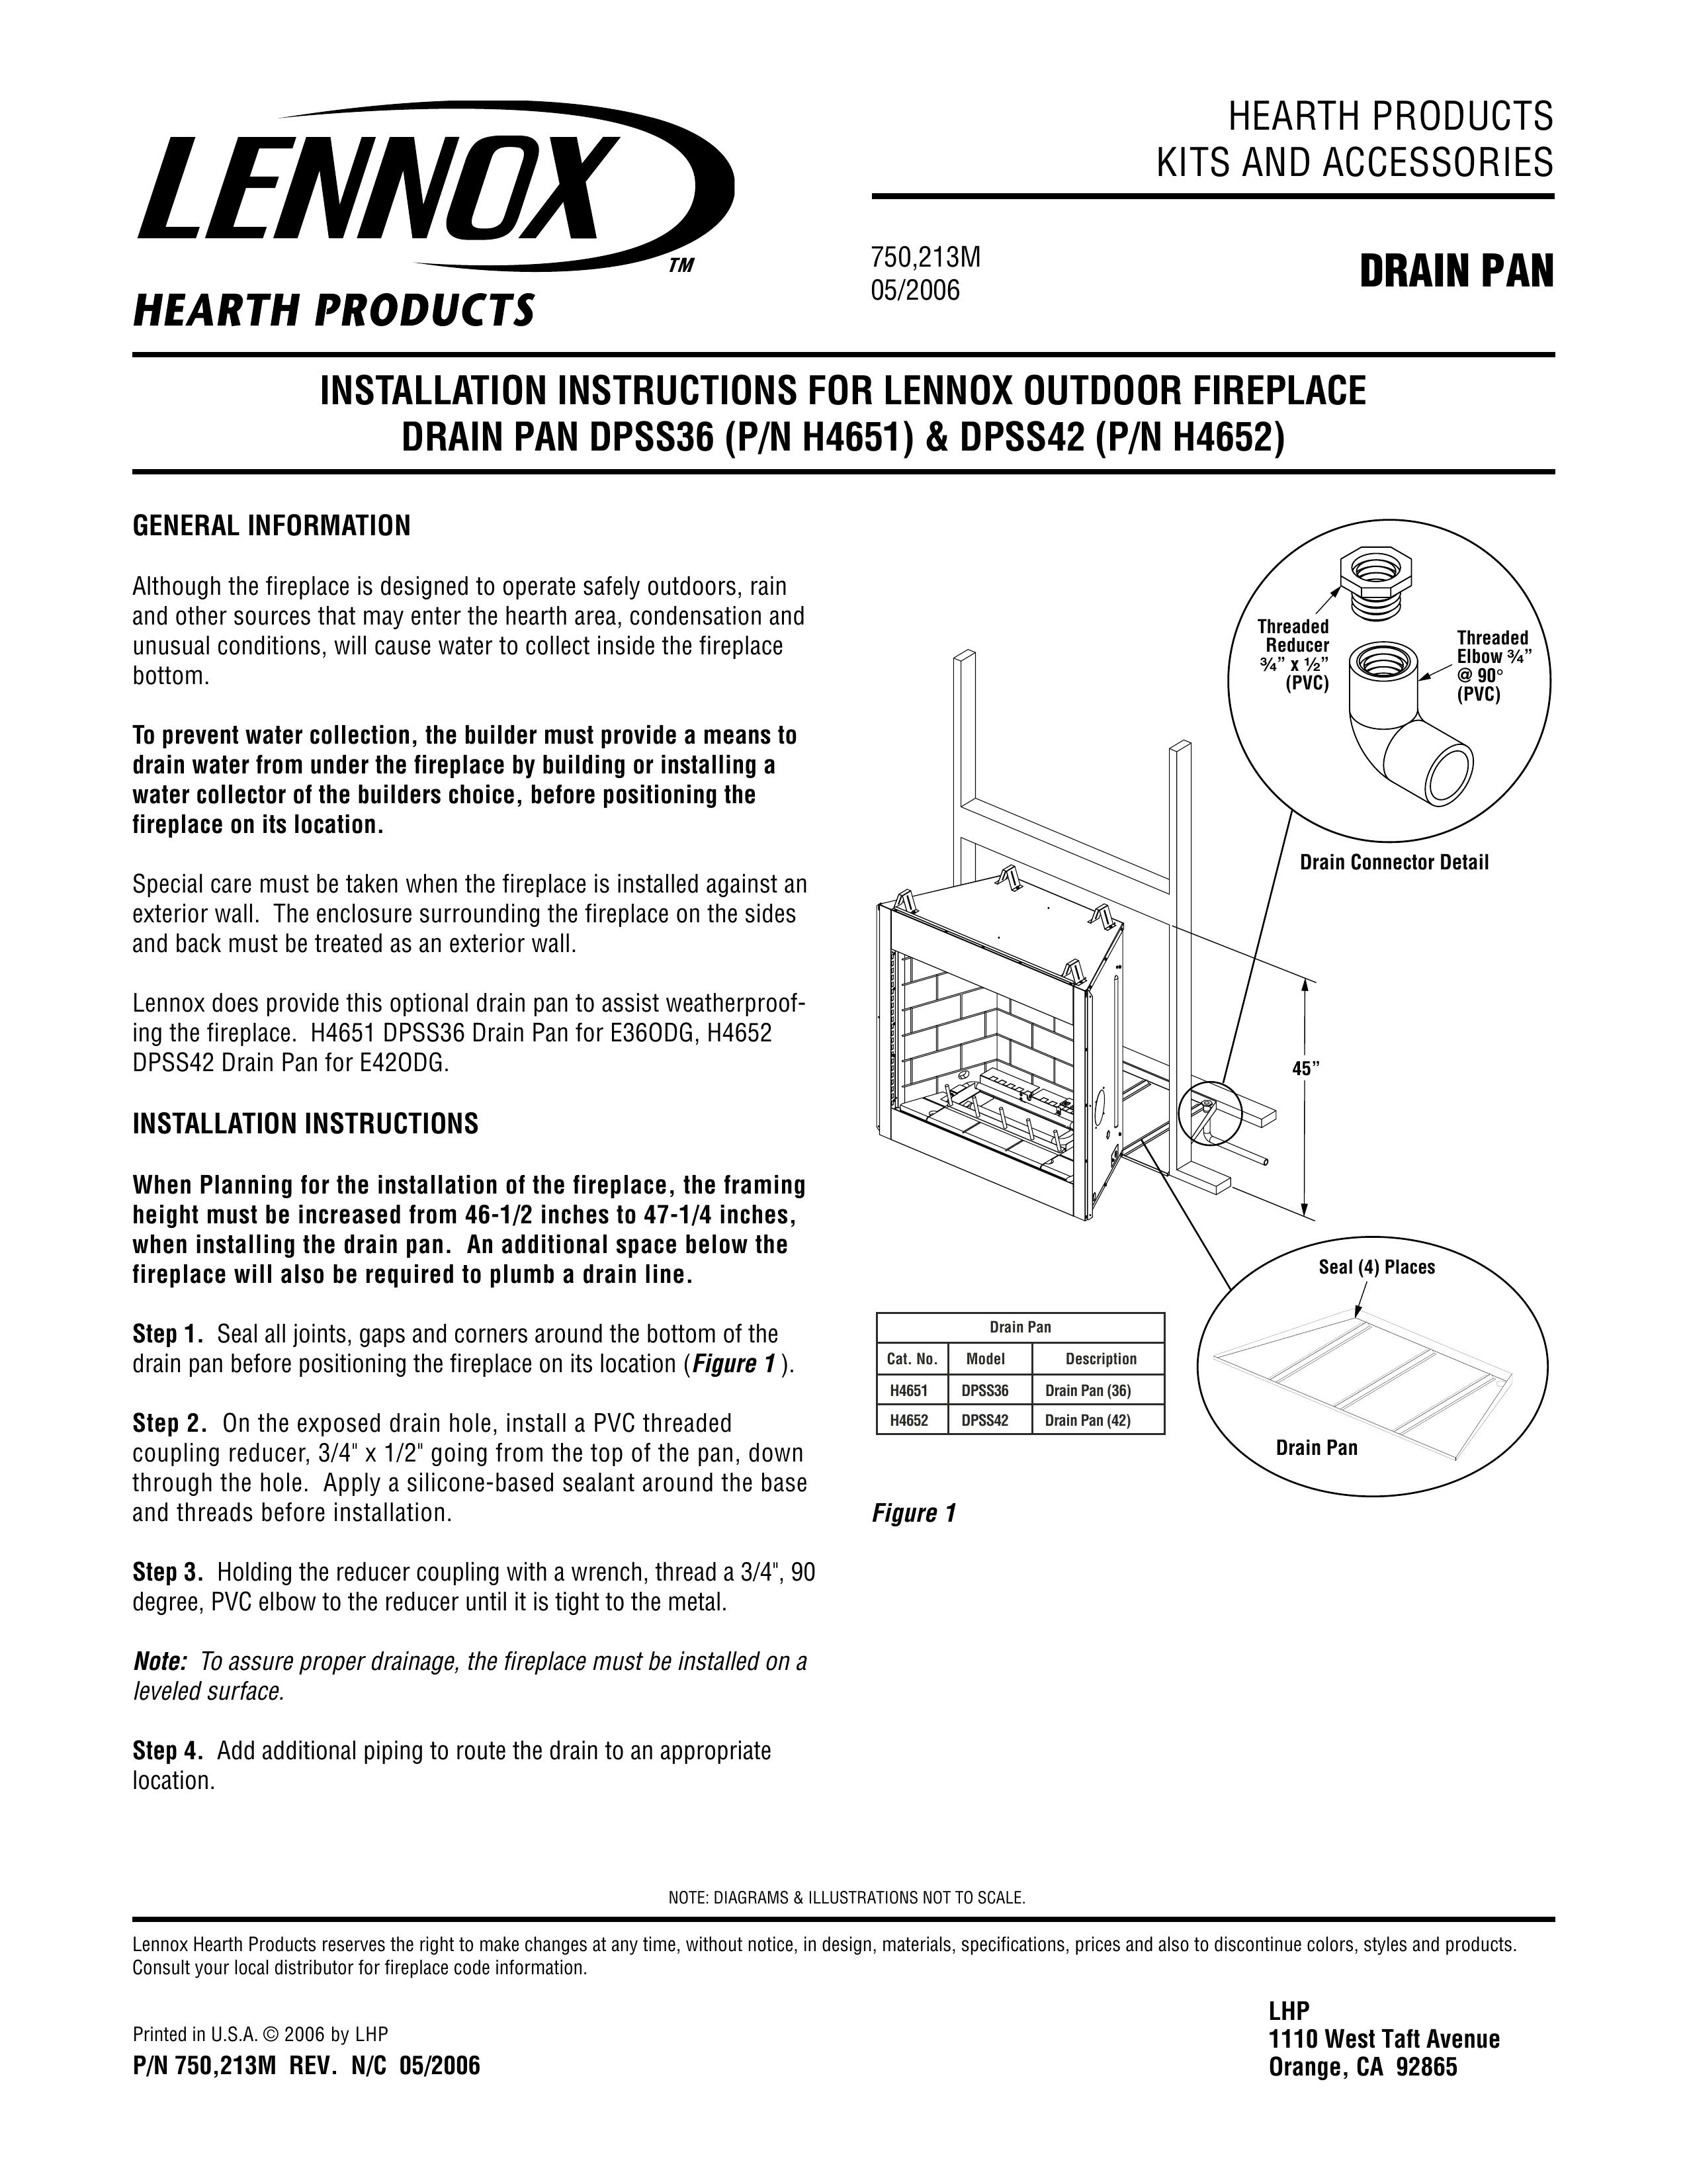 Lennox Hearth DPSS42 Outdoor Fireplace User Manual